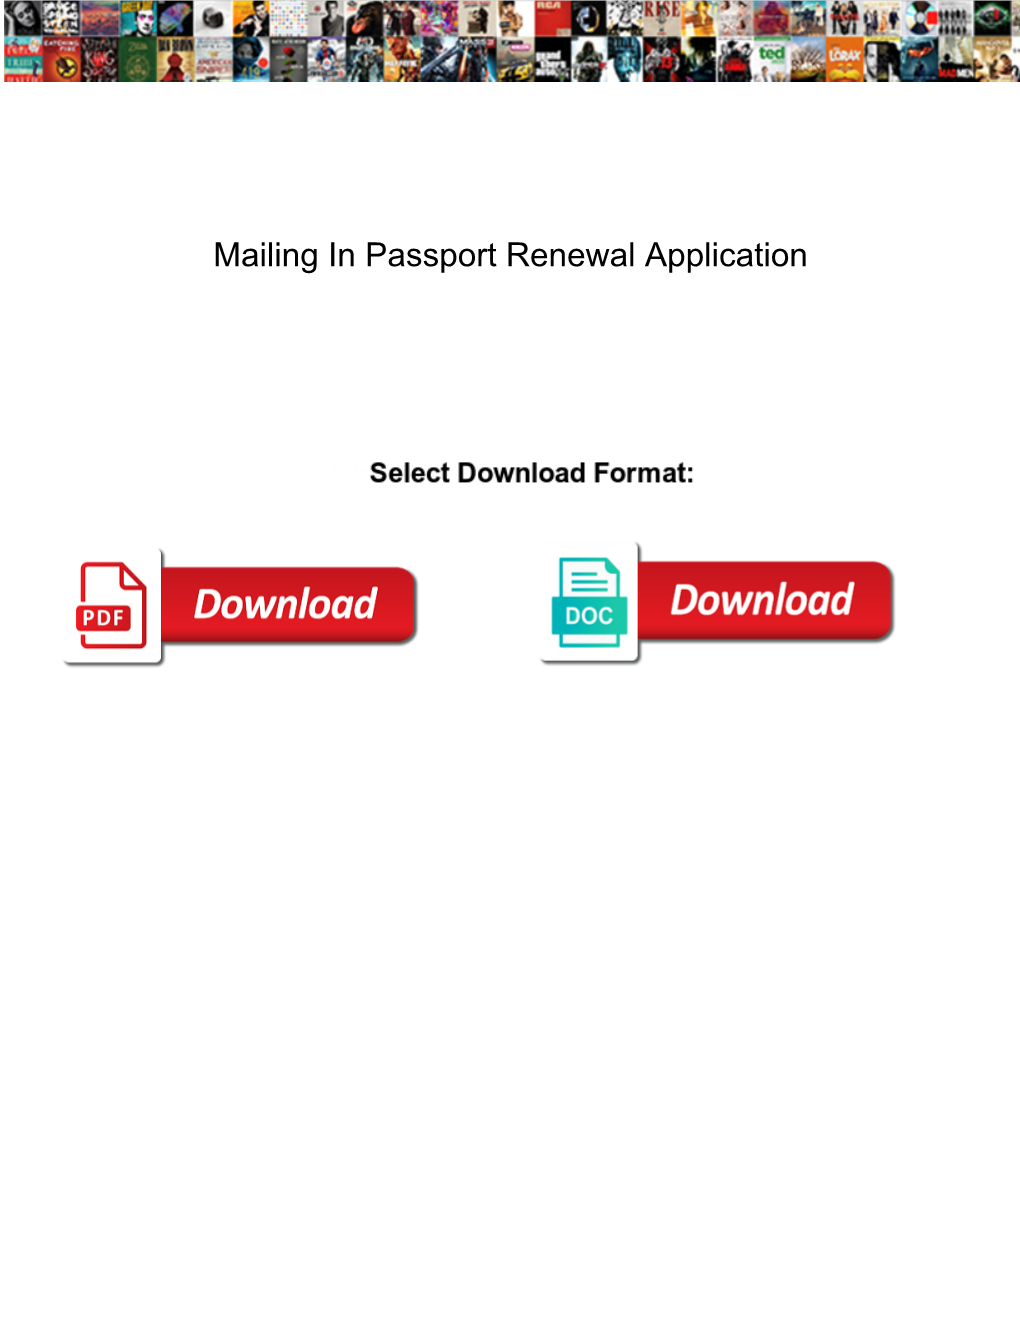 Mailing in Passport Renewal Application